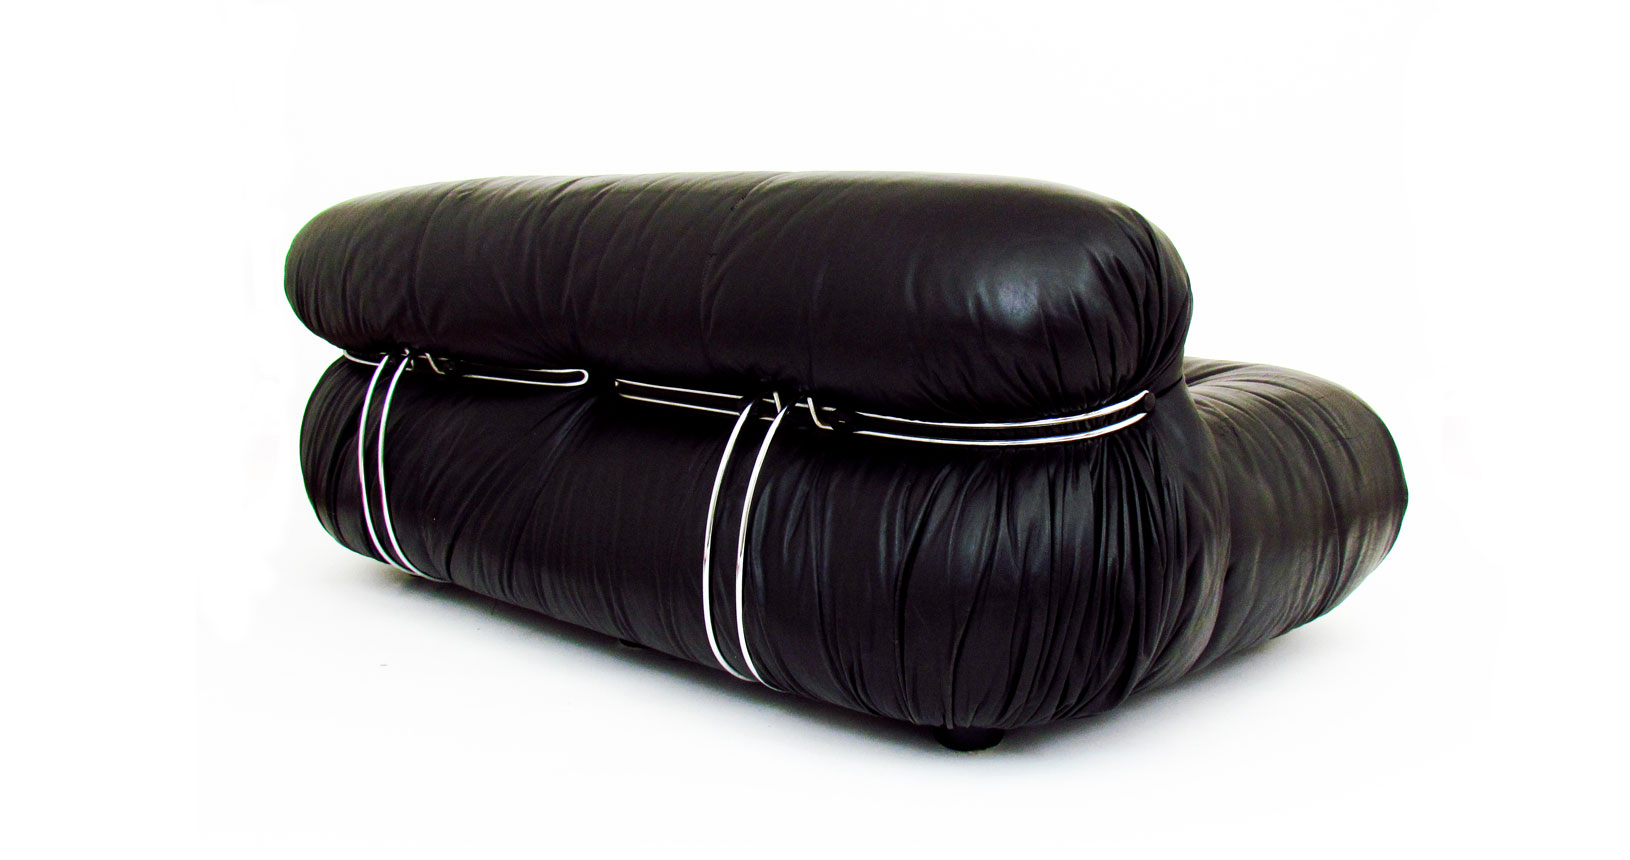 soriana sofa afra tobia scarpa divano pelle leather cassina vintage design